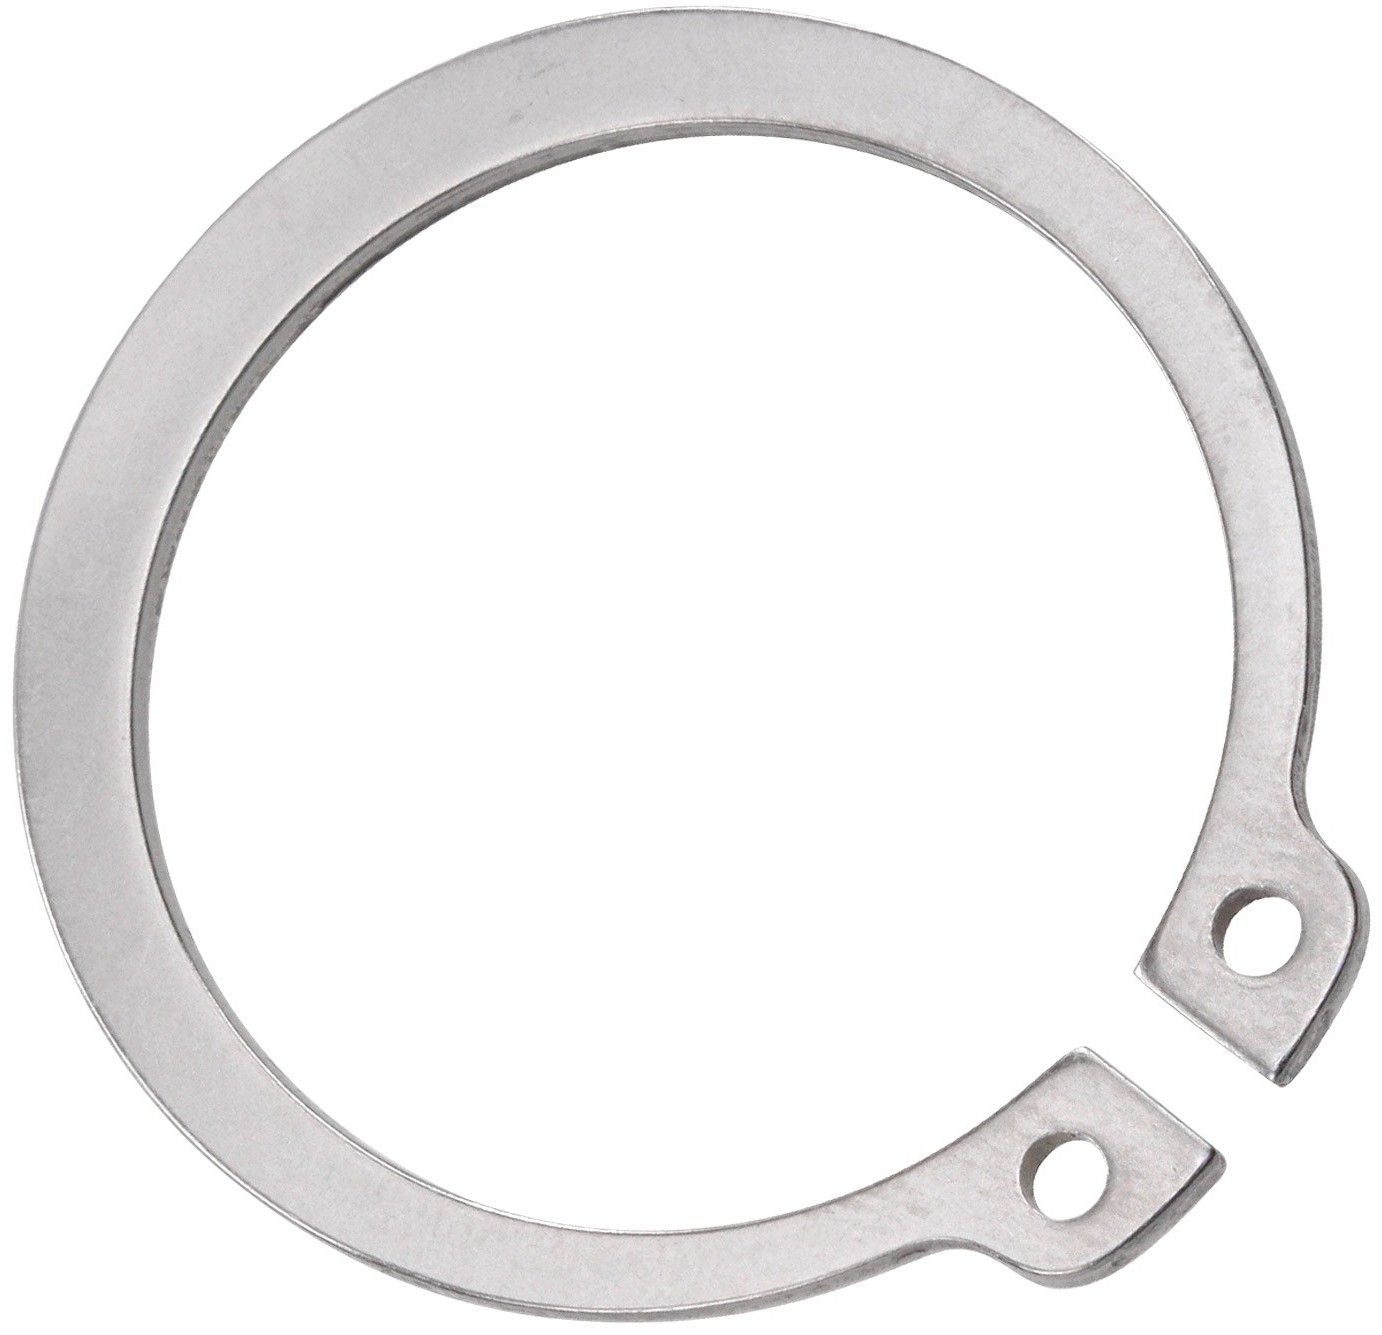 Кольцо стопорное наружное 170х4 DIN 471, нержавеющая сталь 1.4122 (А2) - фото